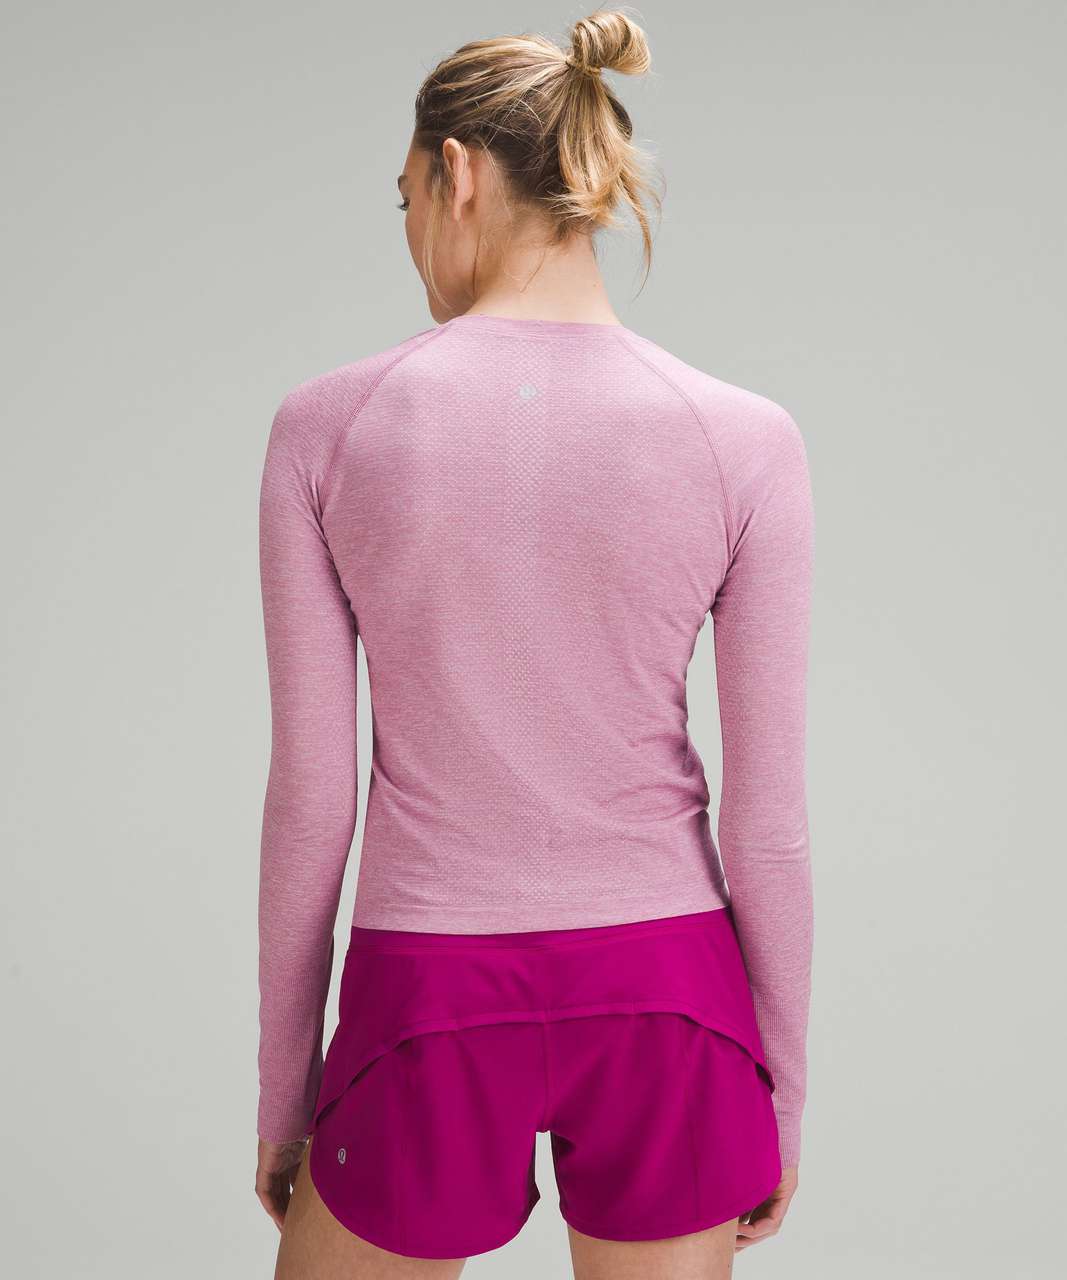 Lululemon Swiftly Tech Long-Sleeve Shirt 2.0 *Race Length - Pink Peony / Velvet Dust